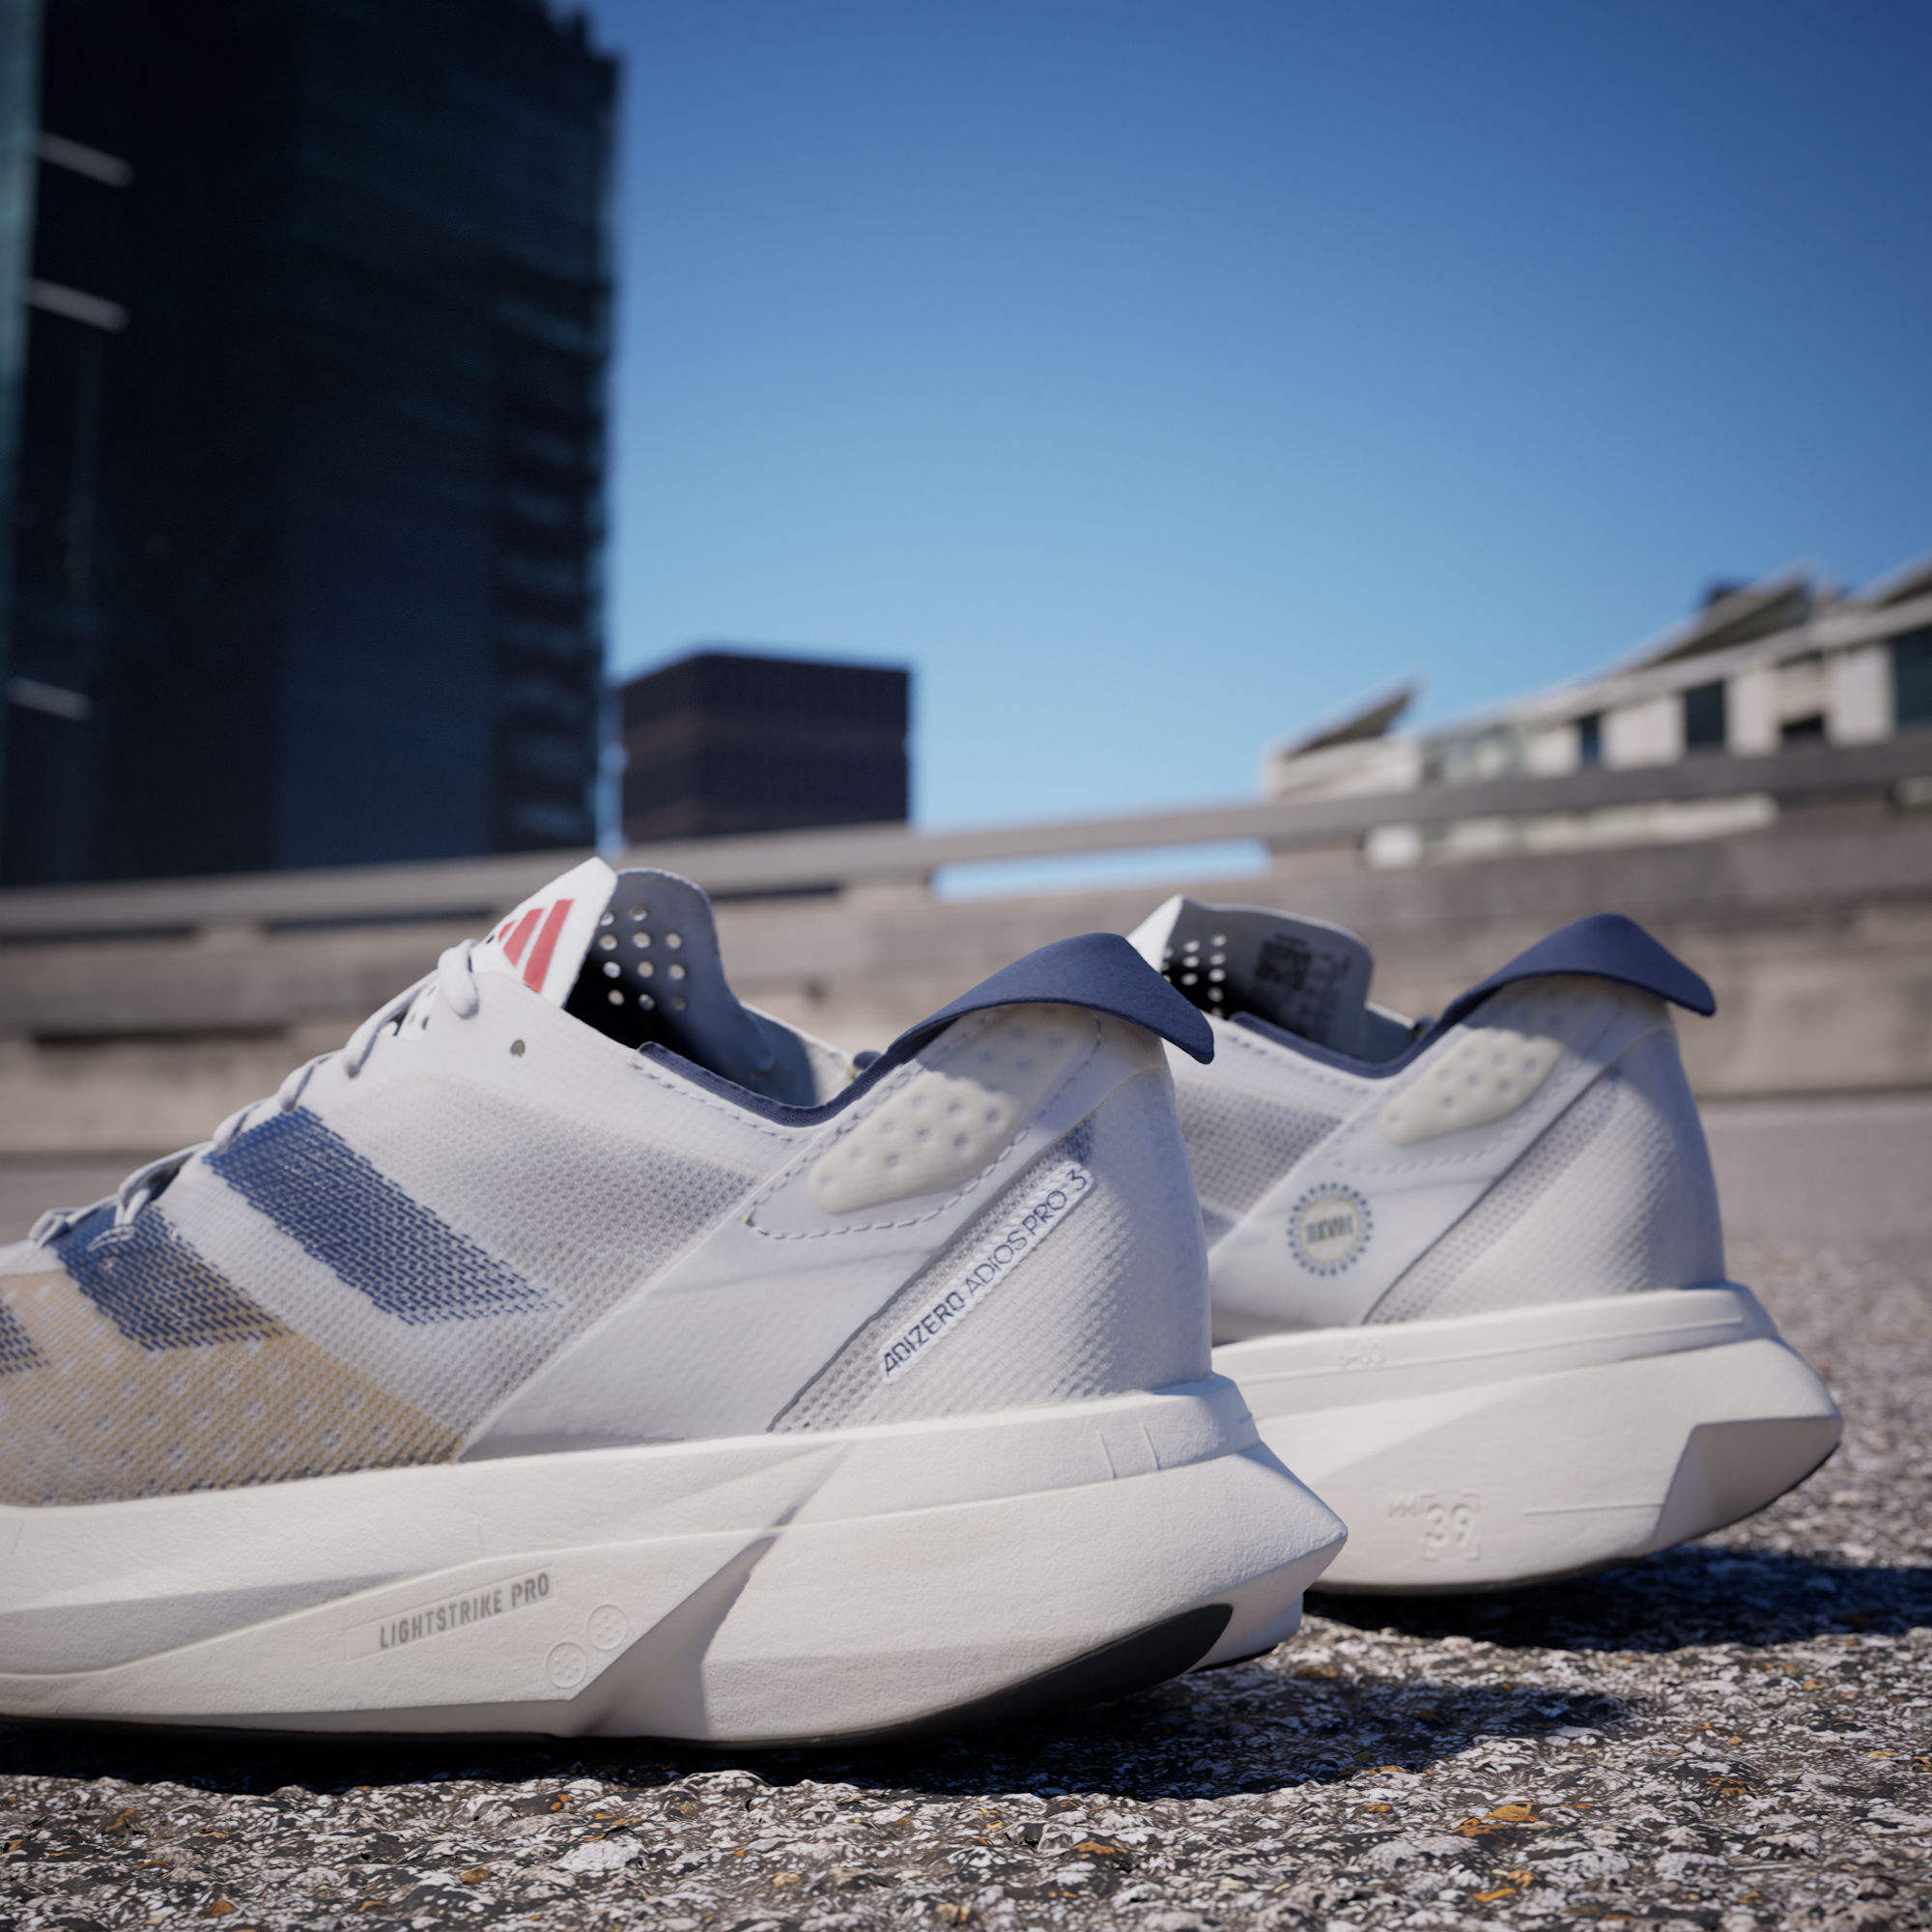 ADIZERO ADIOS PRO 3 運動鞋- 灰色| 女子| adidas(愛迪達)香港官方網上商店